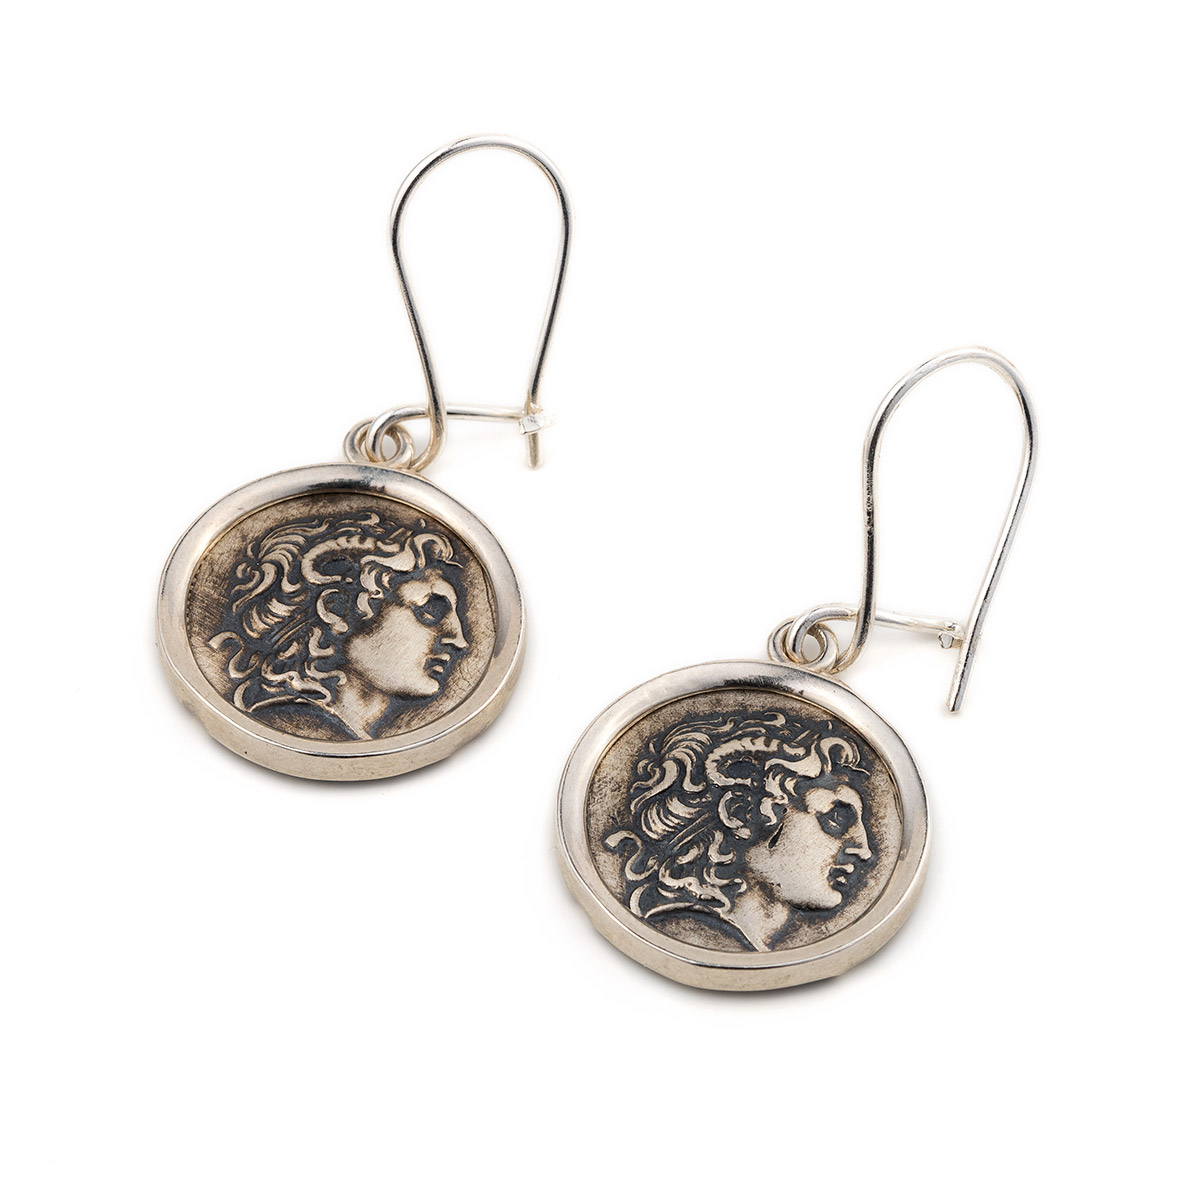 Details about   Alexander the Great silver earrings Antique earrings Ancient Greek coin earrings 